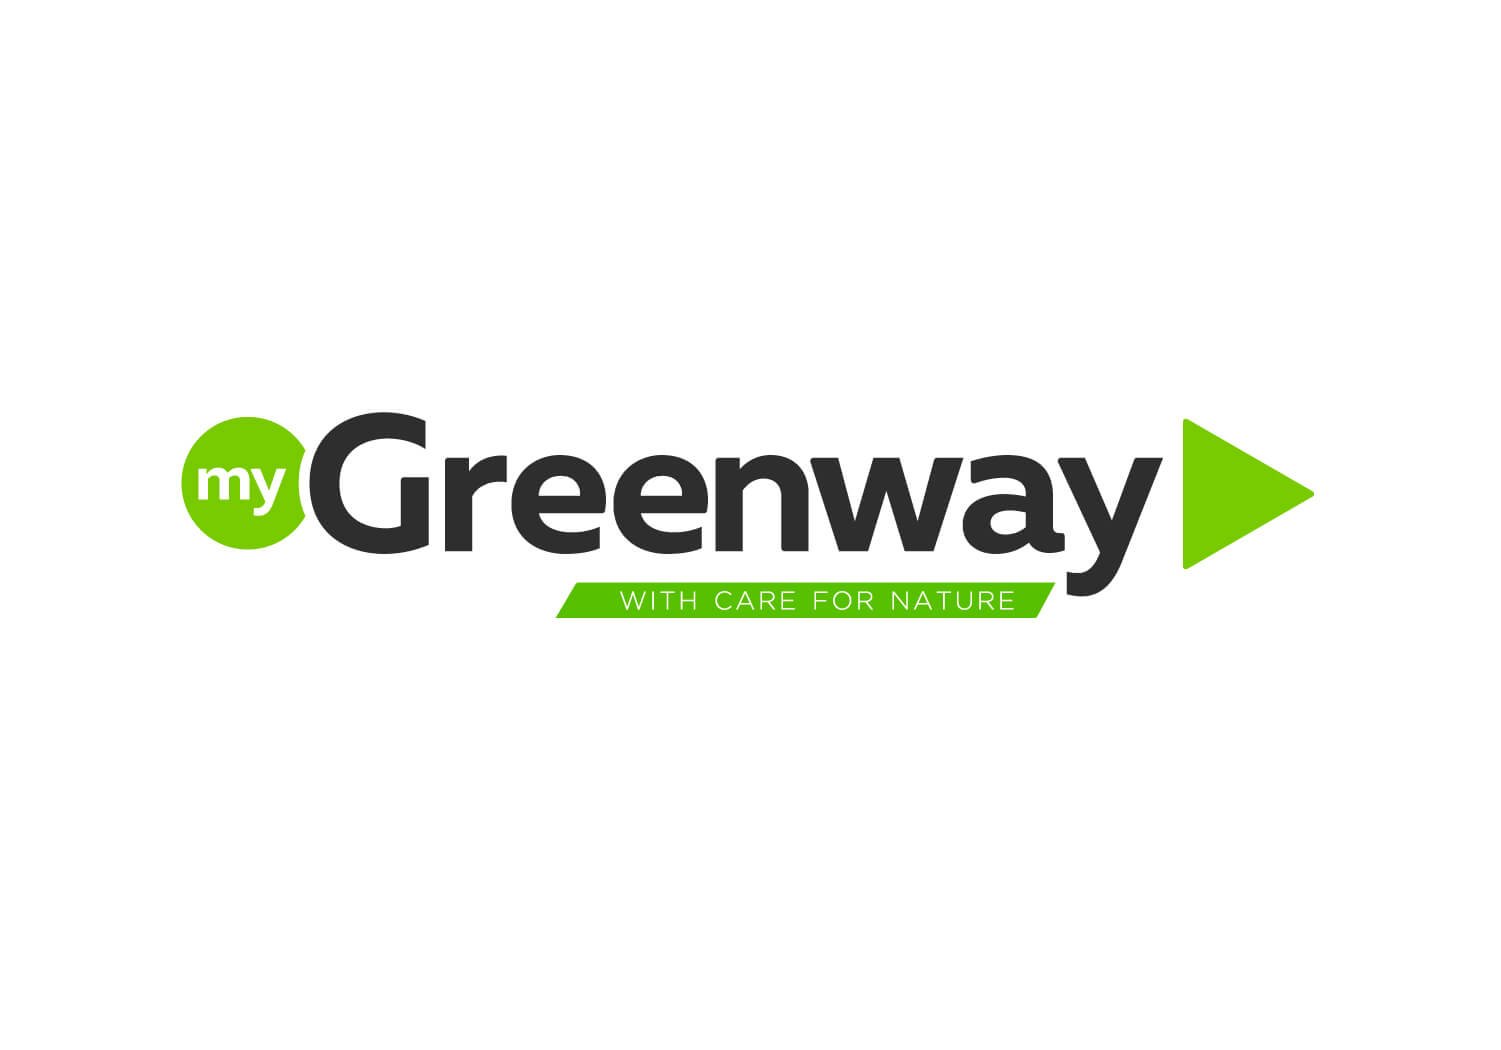 Гринвей глобал ком. Greenway. Эмблема Гринвея. Greenway логотип на прозрачном фоне. Гринвей без фона.